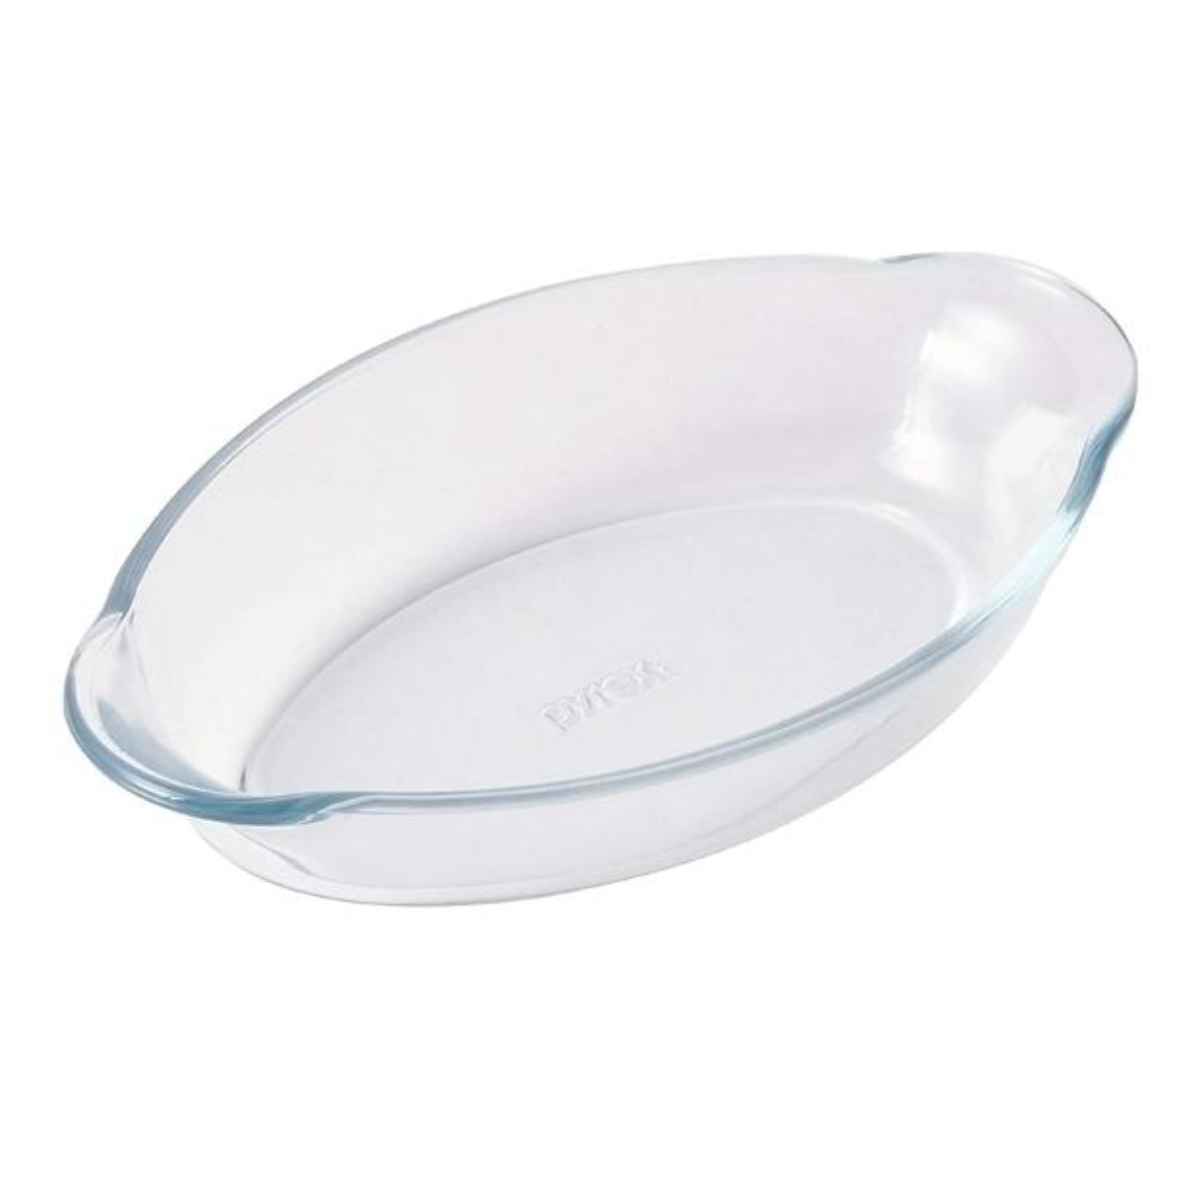 dショッピング |グラタン皿 19.5cm Pyrex パイレックス 耐熱ガラス